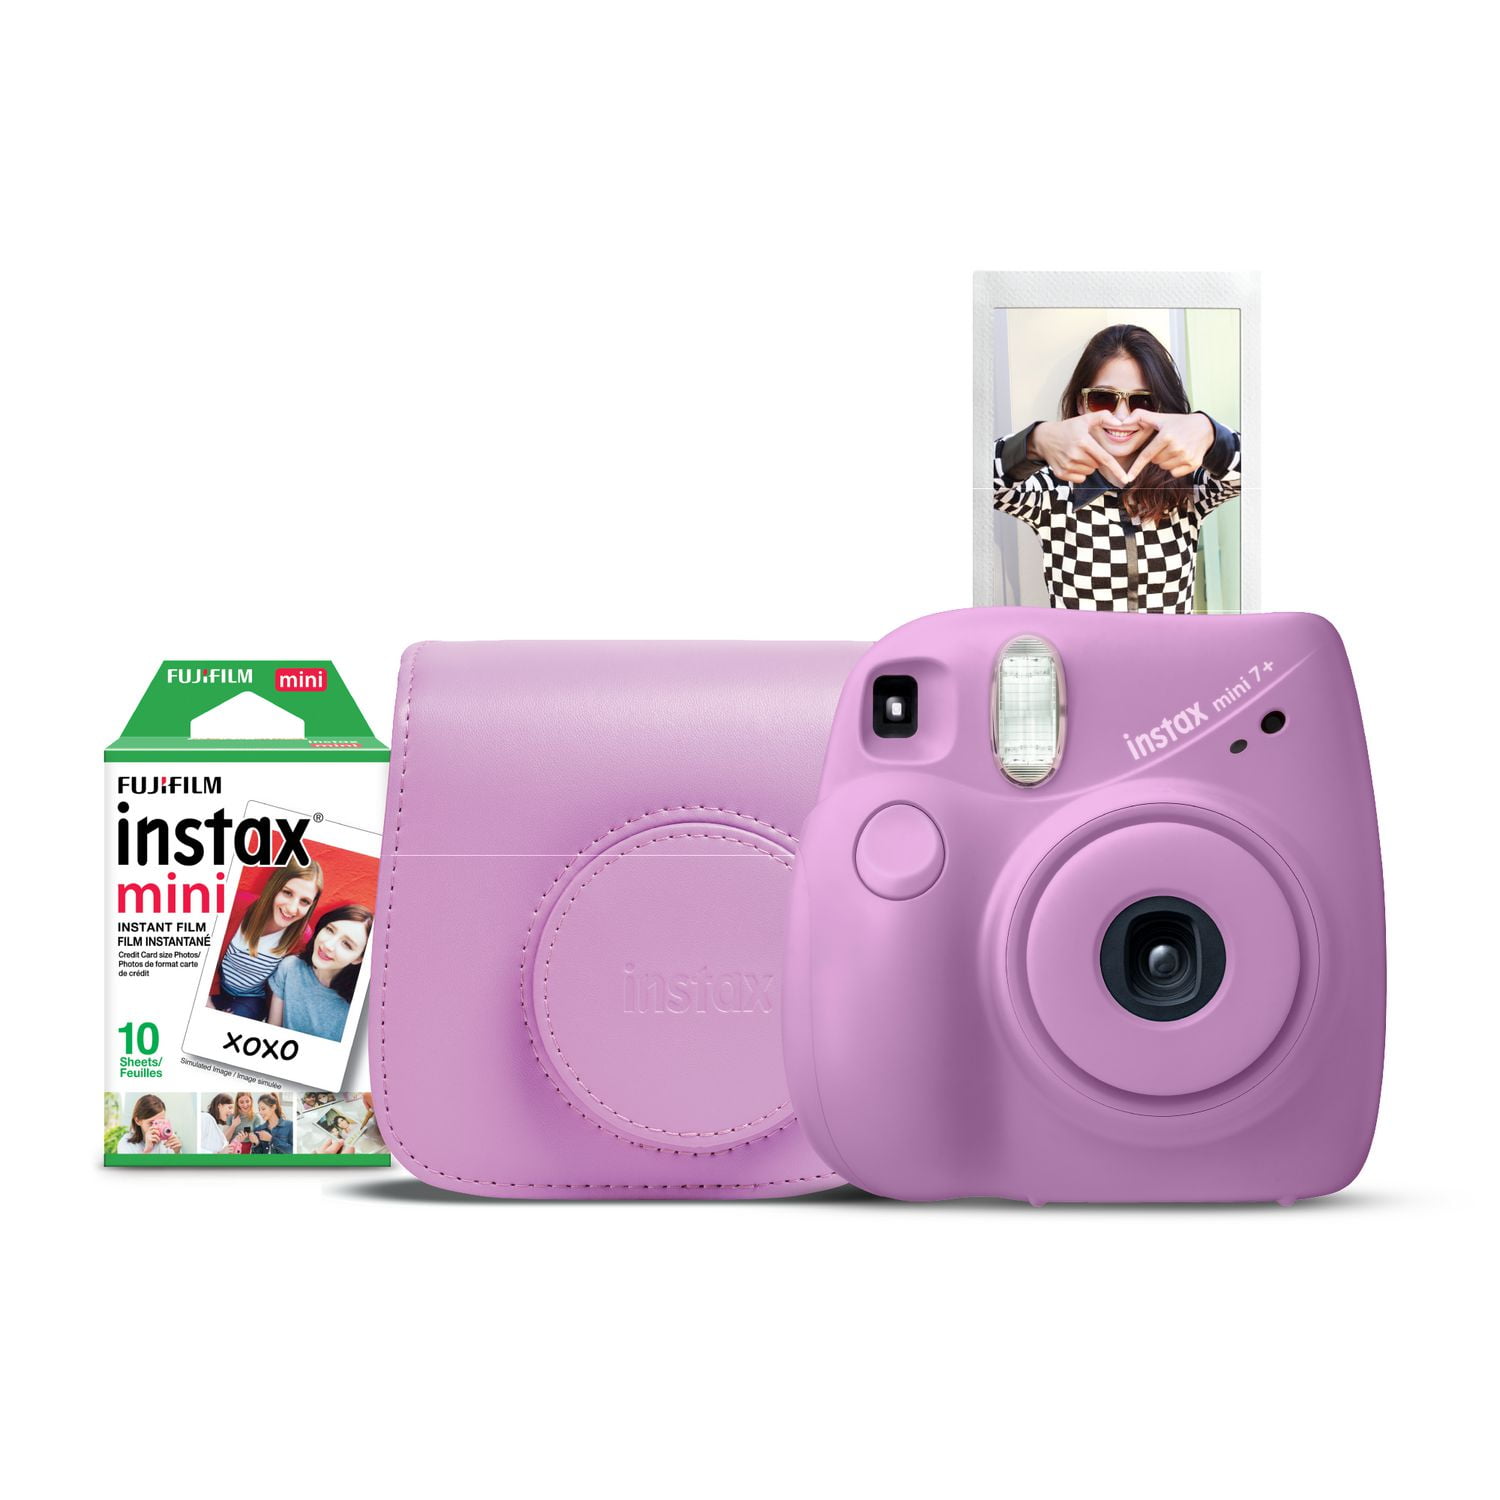 Fujifilm Instax Mini 7+ Instant Camera Bundle